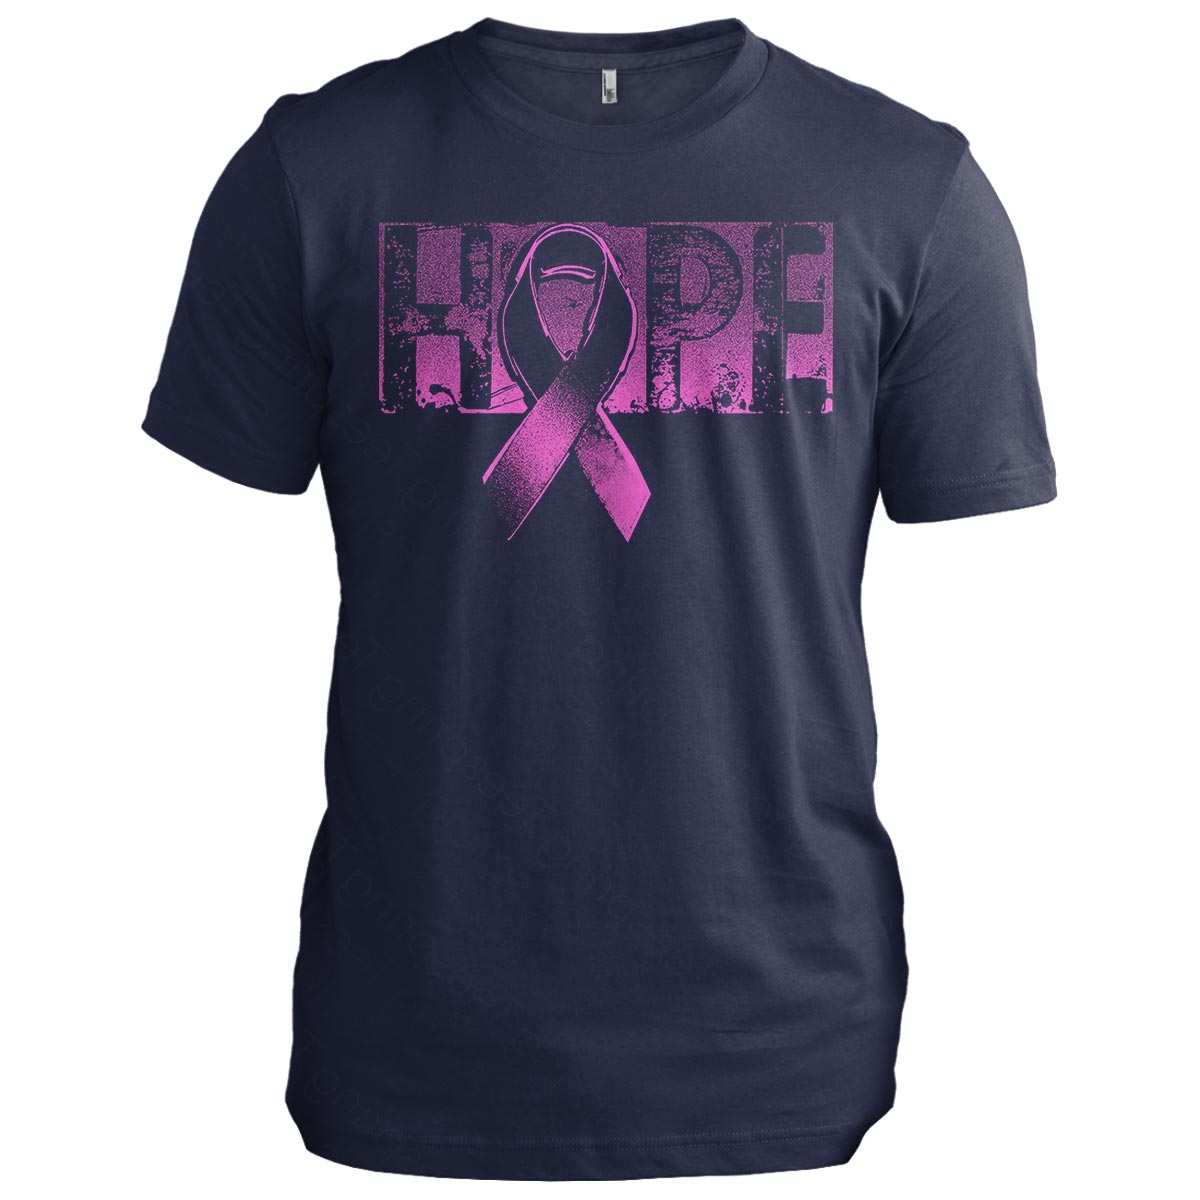 Breast Cancer Awareness: HOPE